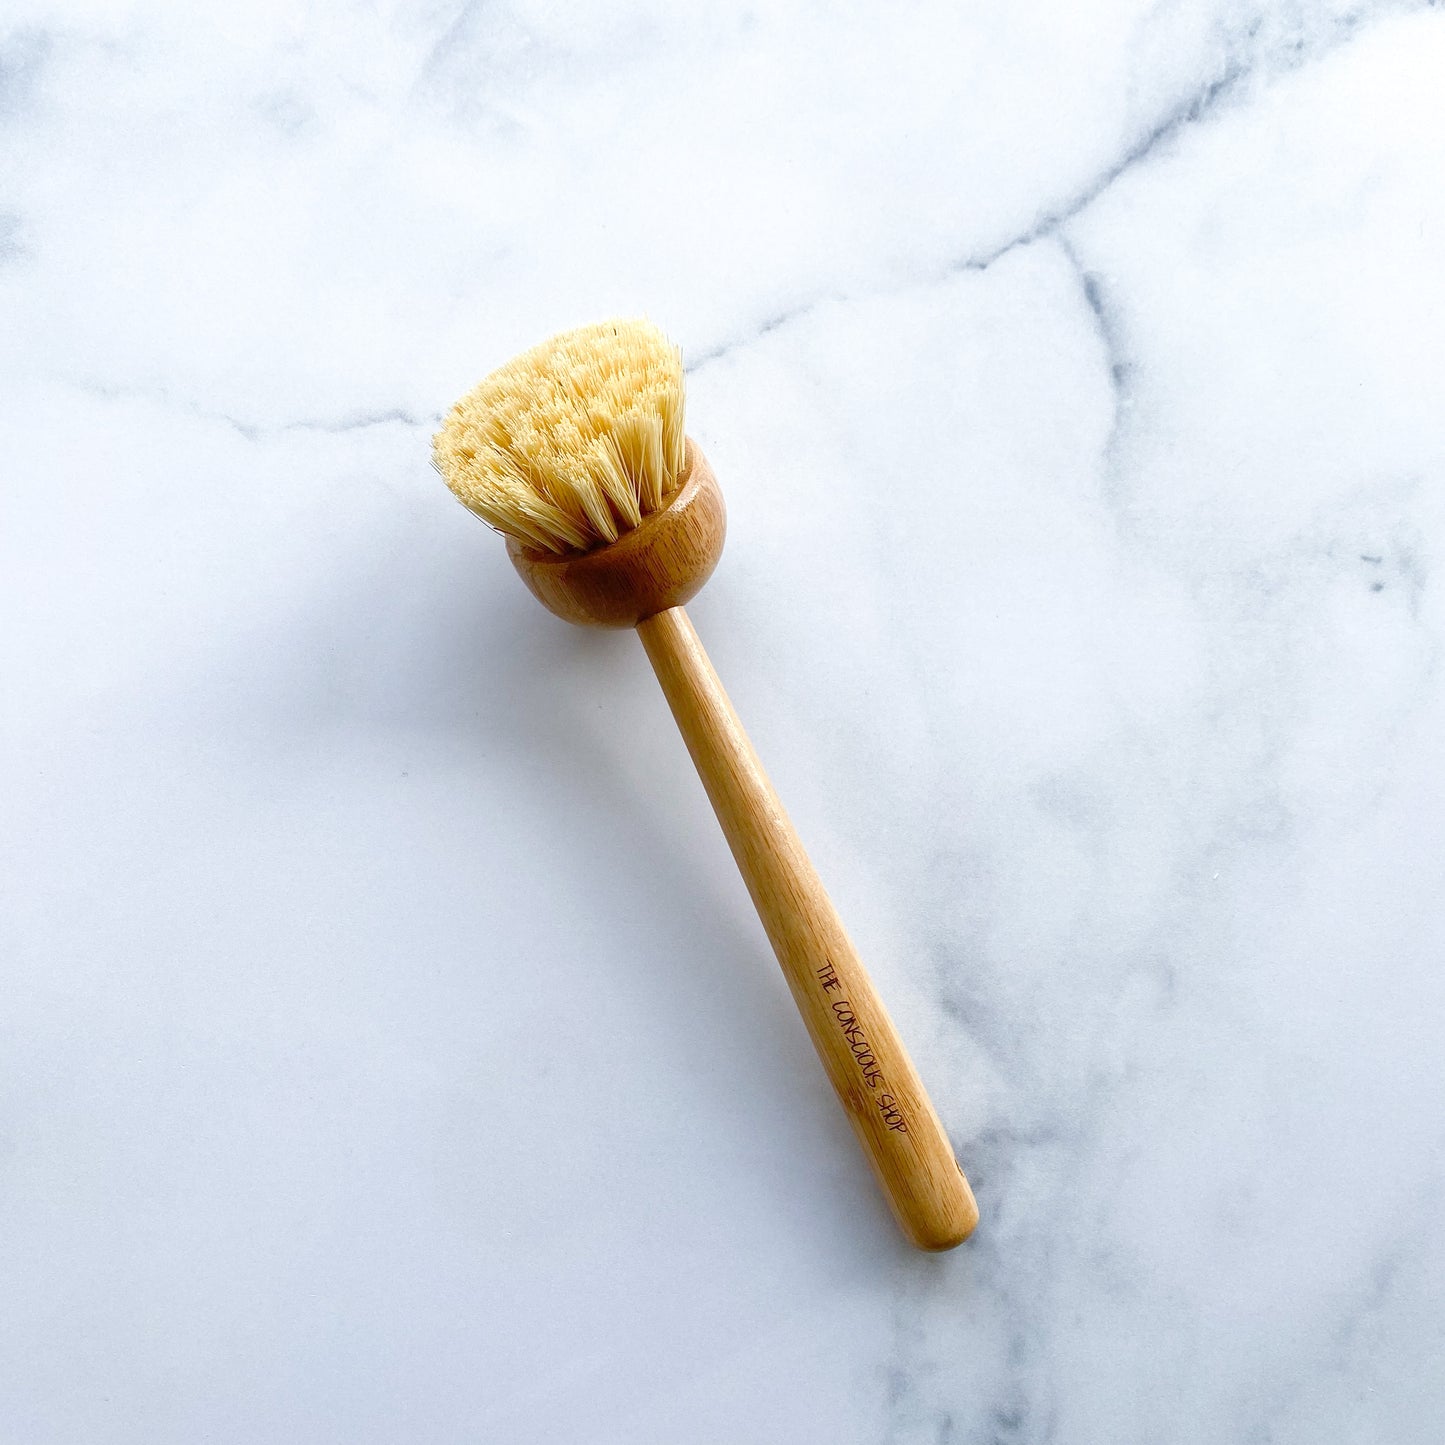 Wood Dish Washing & Scrubbing Brush - Cleaning Brush for Dishes & Kitchen